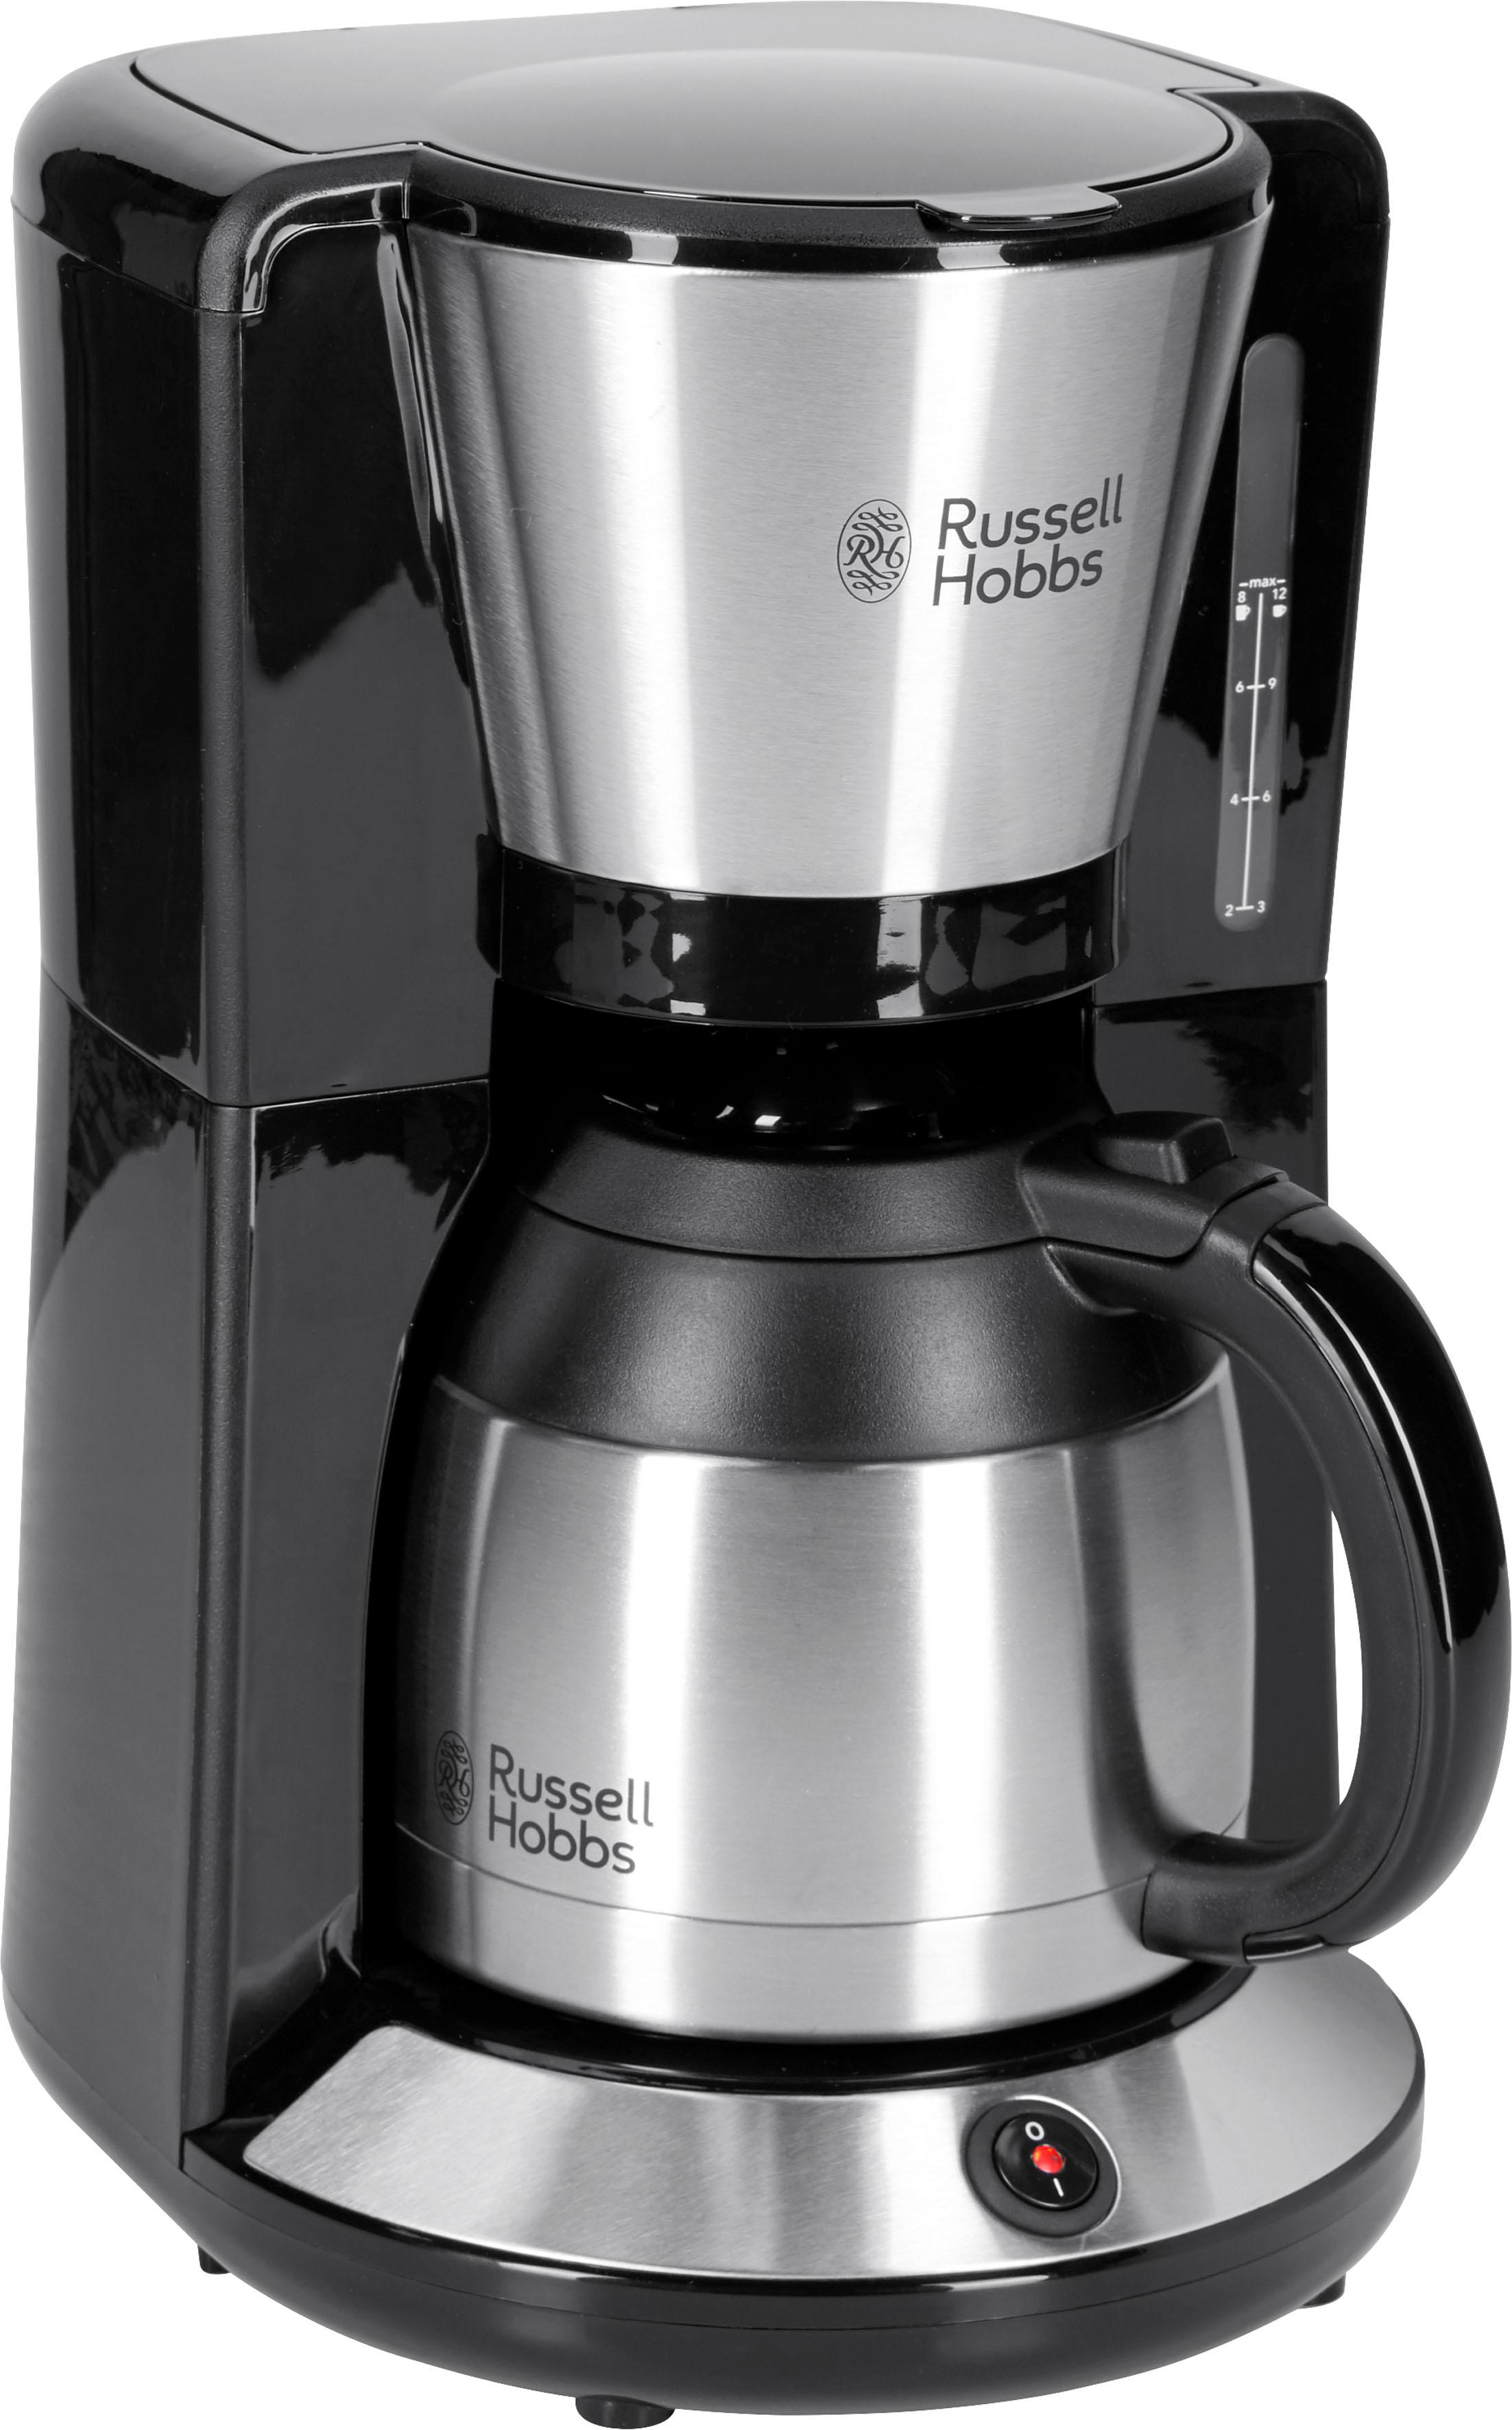 RUSSELL HOBBS Filterkaffeemaschine kaufen »Victory 1x4, 24030-56«, Digitale auf Kaffeemaschine Glas- Raten